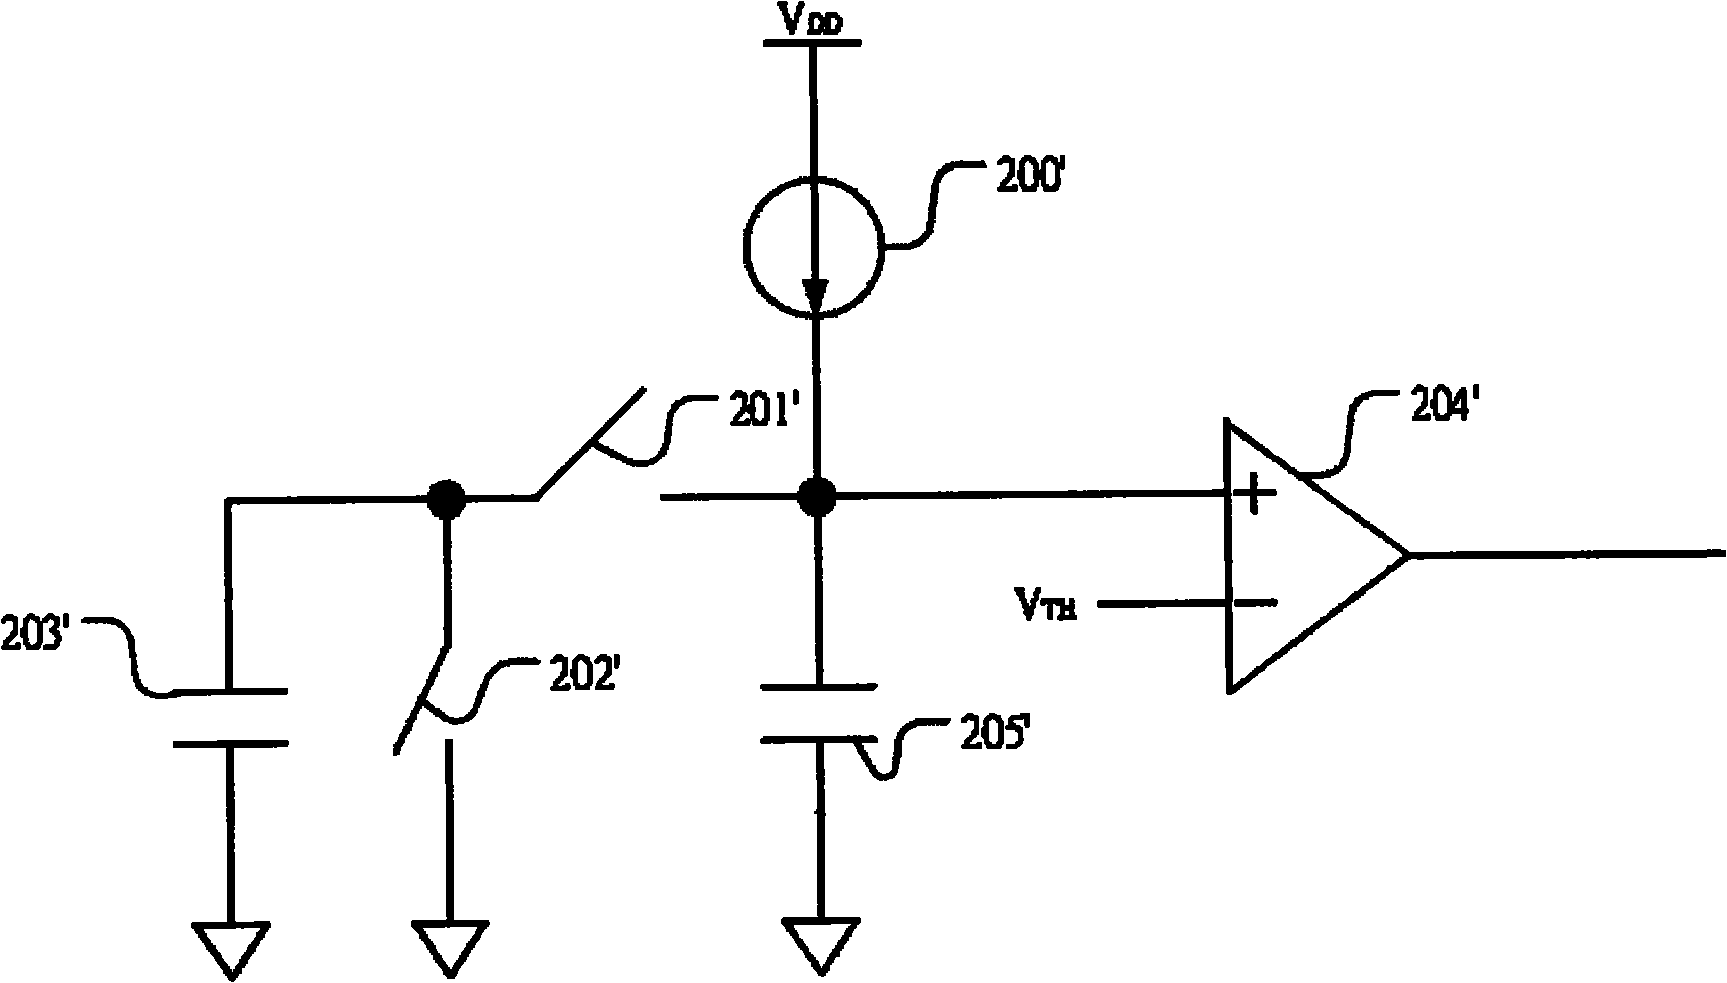 Capacitor sensing circuit having anti-electromagnetic interference capability